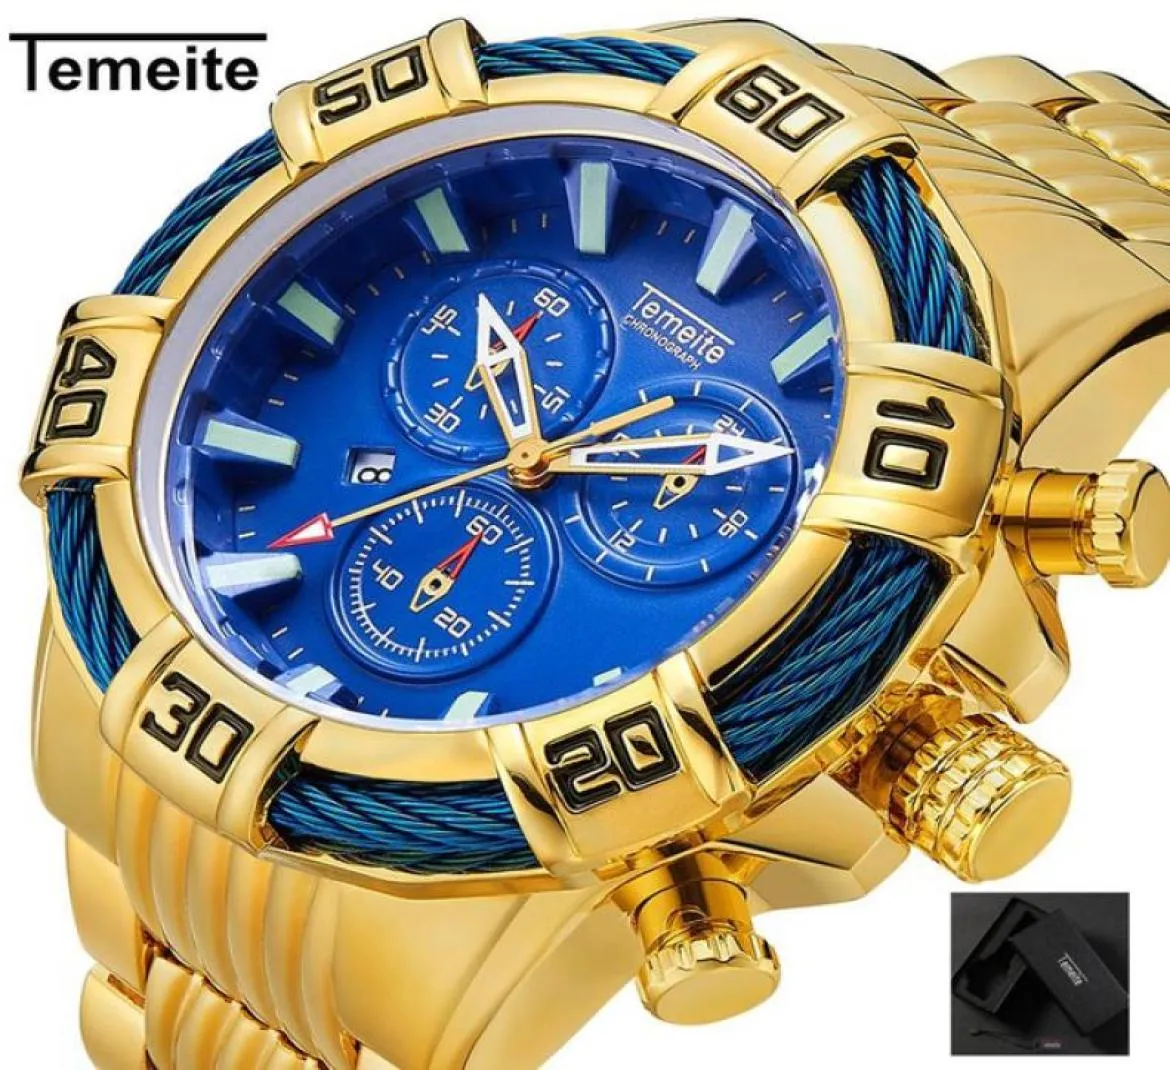 Temeite Relogio Masculino Business Luxury Gold Quartz Analog Men039s Watch Sport Watch Men Immasproof Military Homme Wristwatc8072118